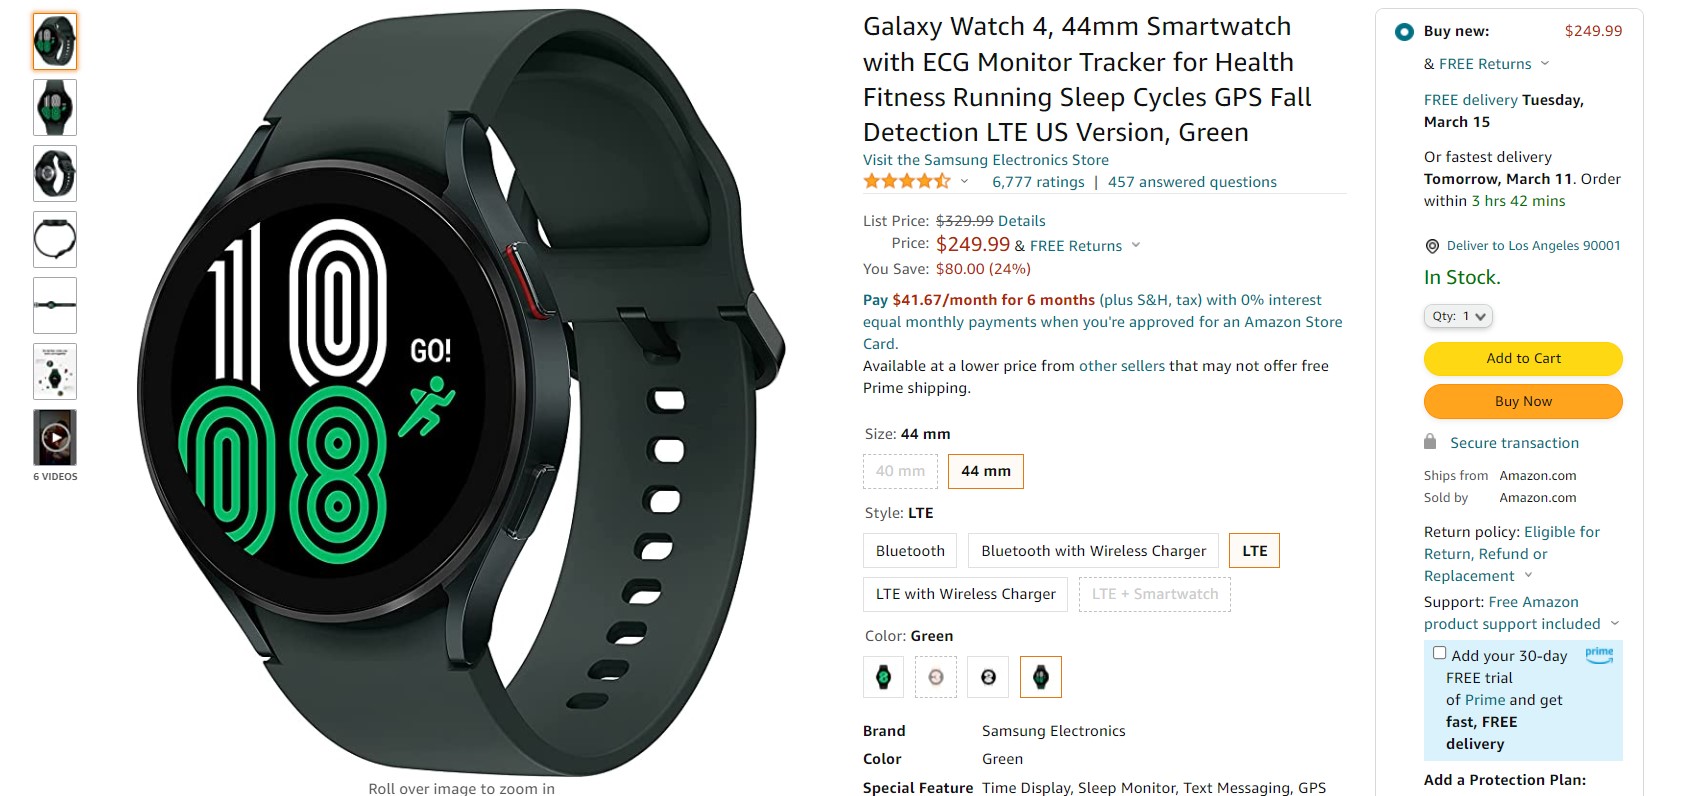 Samsung Galaxy Watch 4 Green Amazon Deal